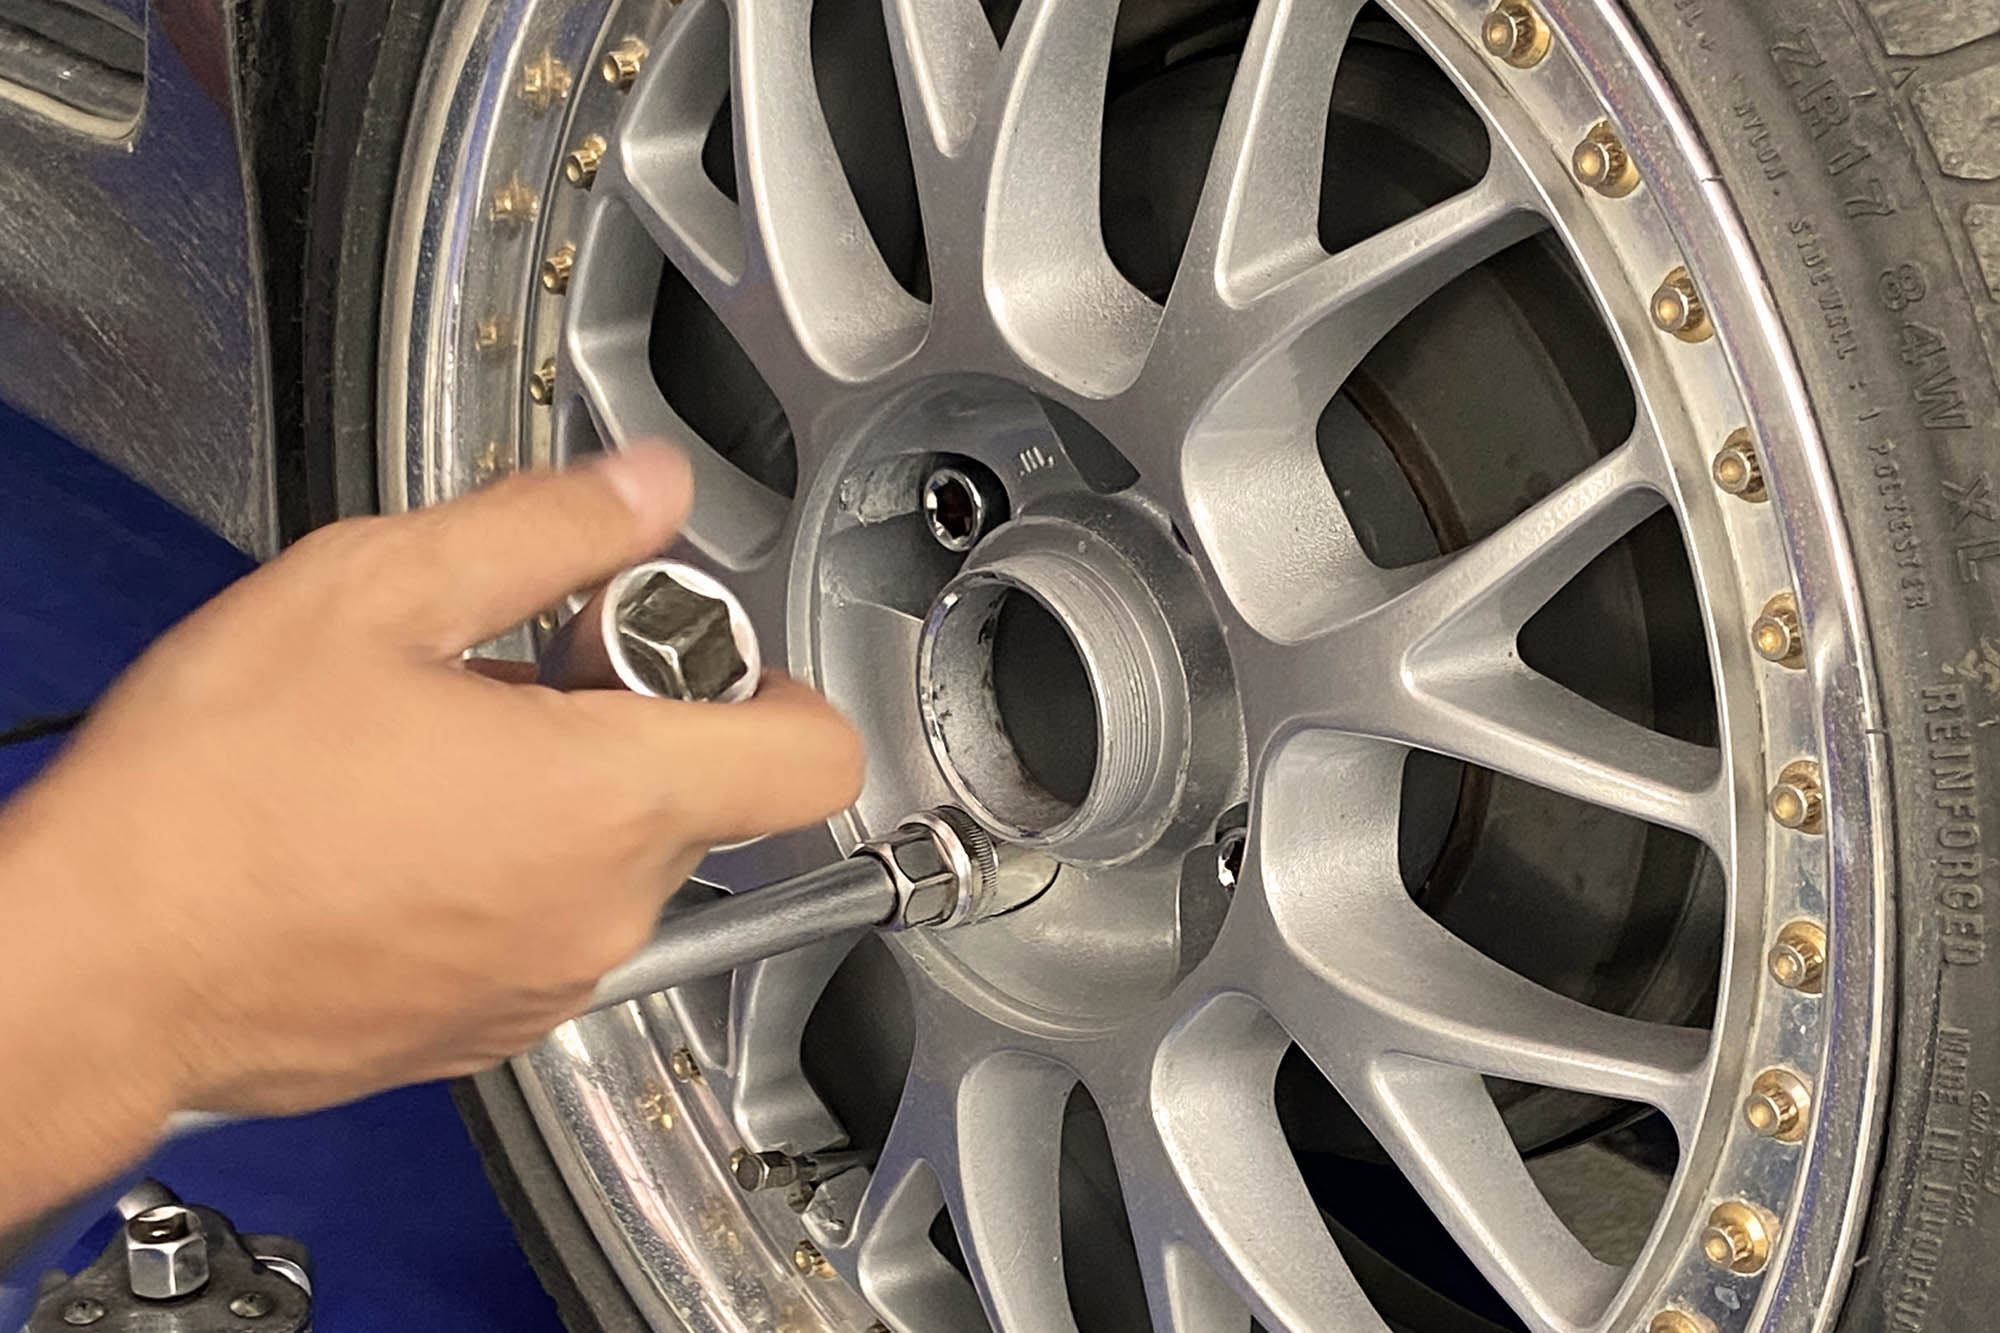 Overtightened Wheel Nut Can Be Dangerous